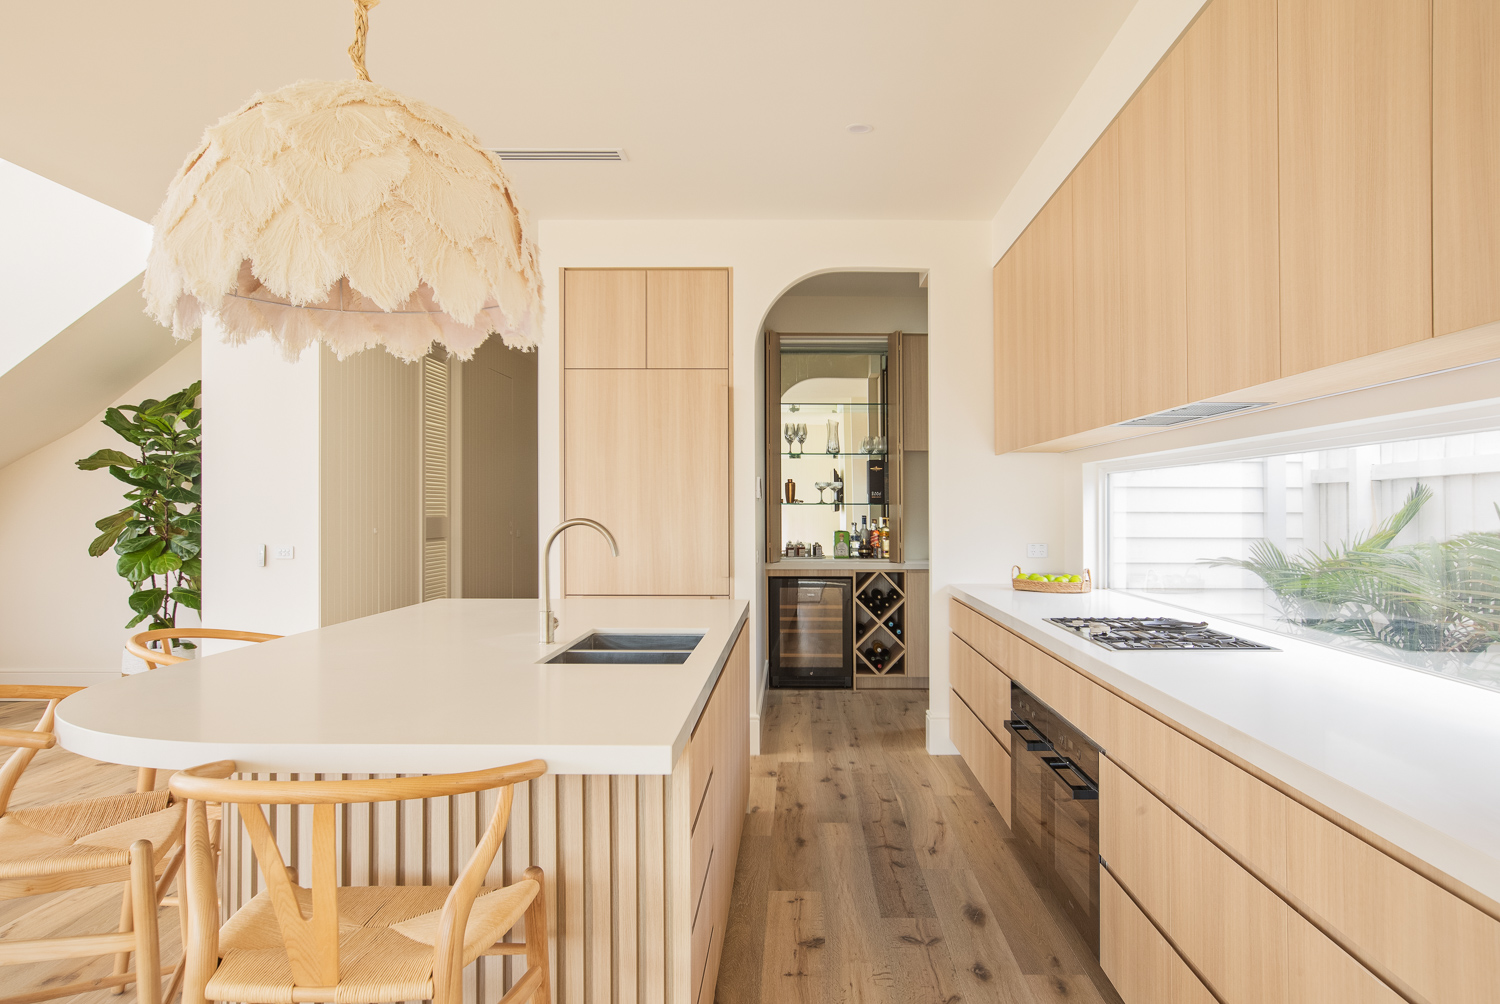 Whitehaven Yarraville – Brand New Coastal Home